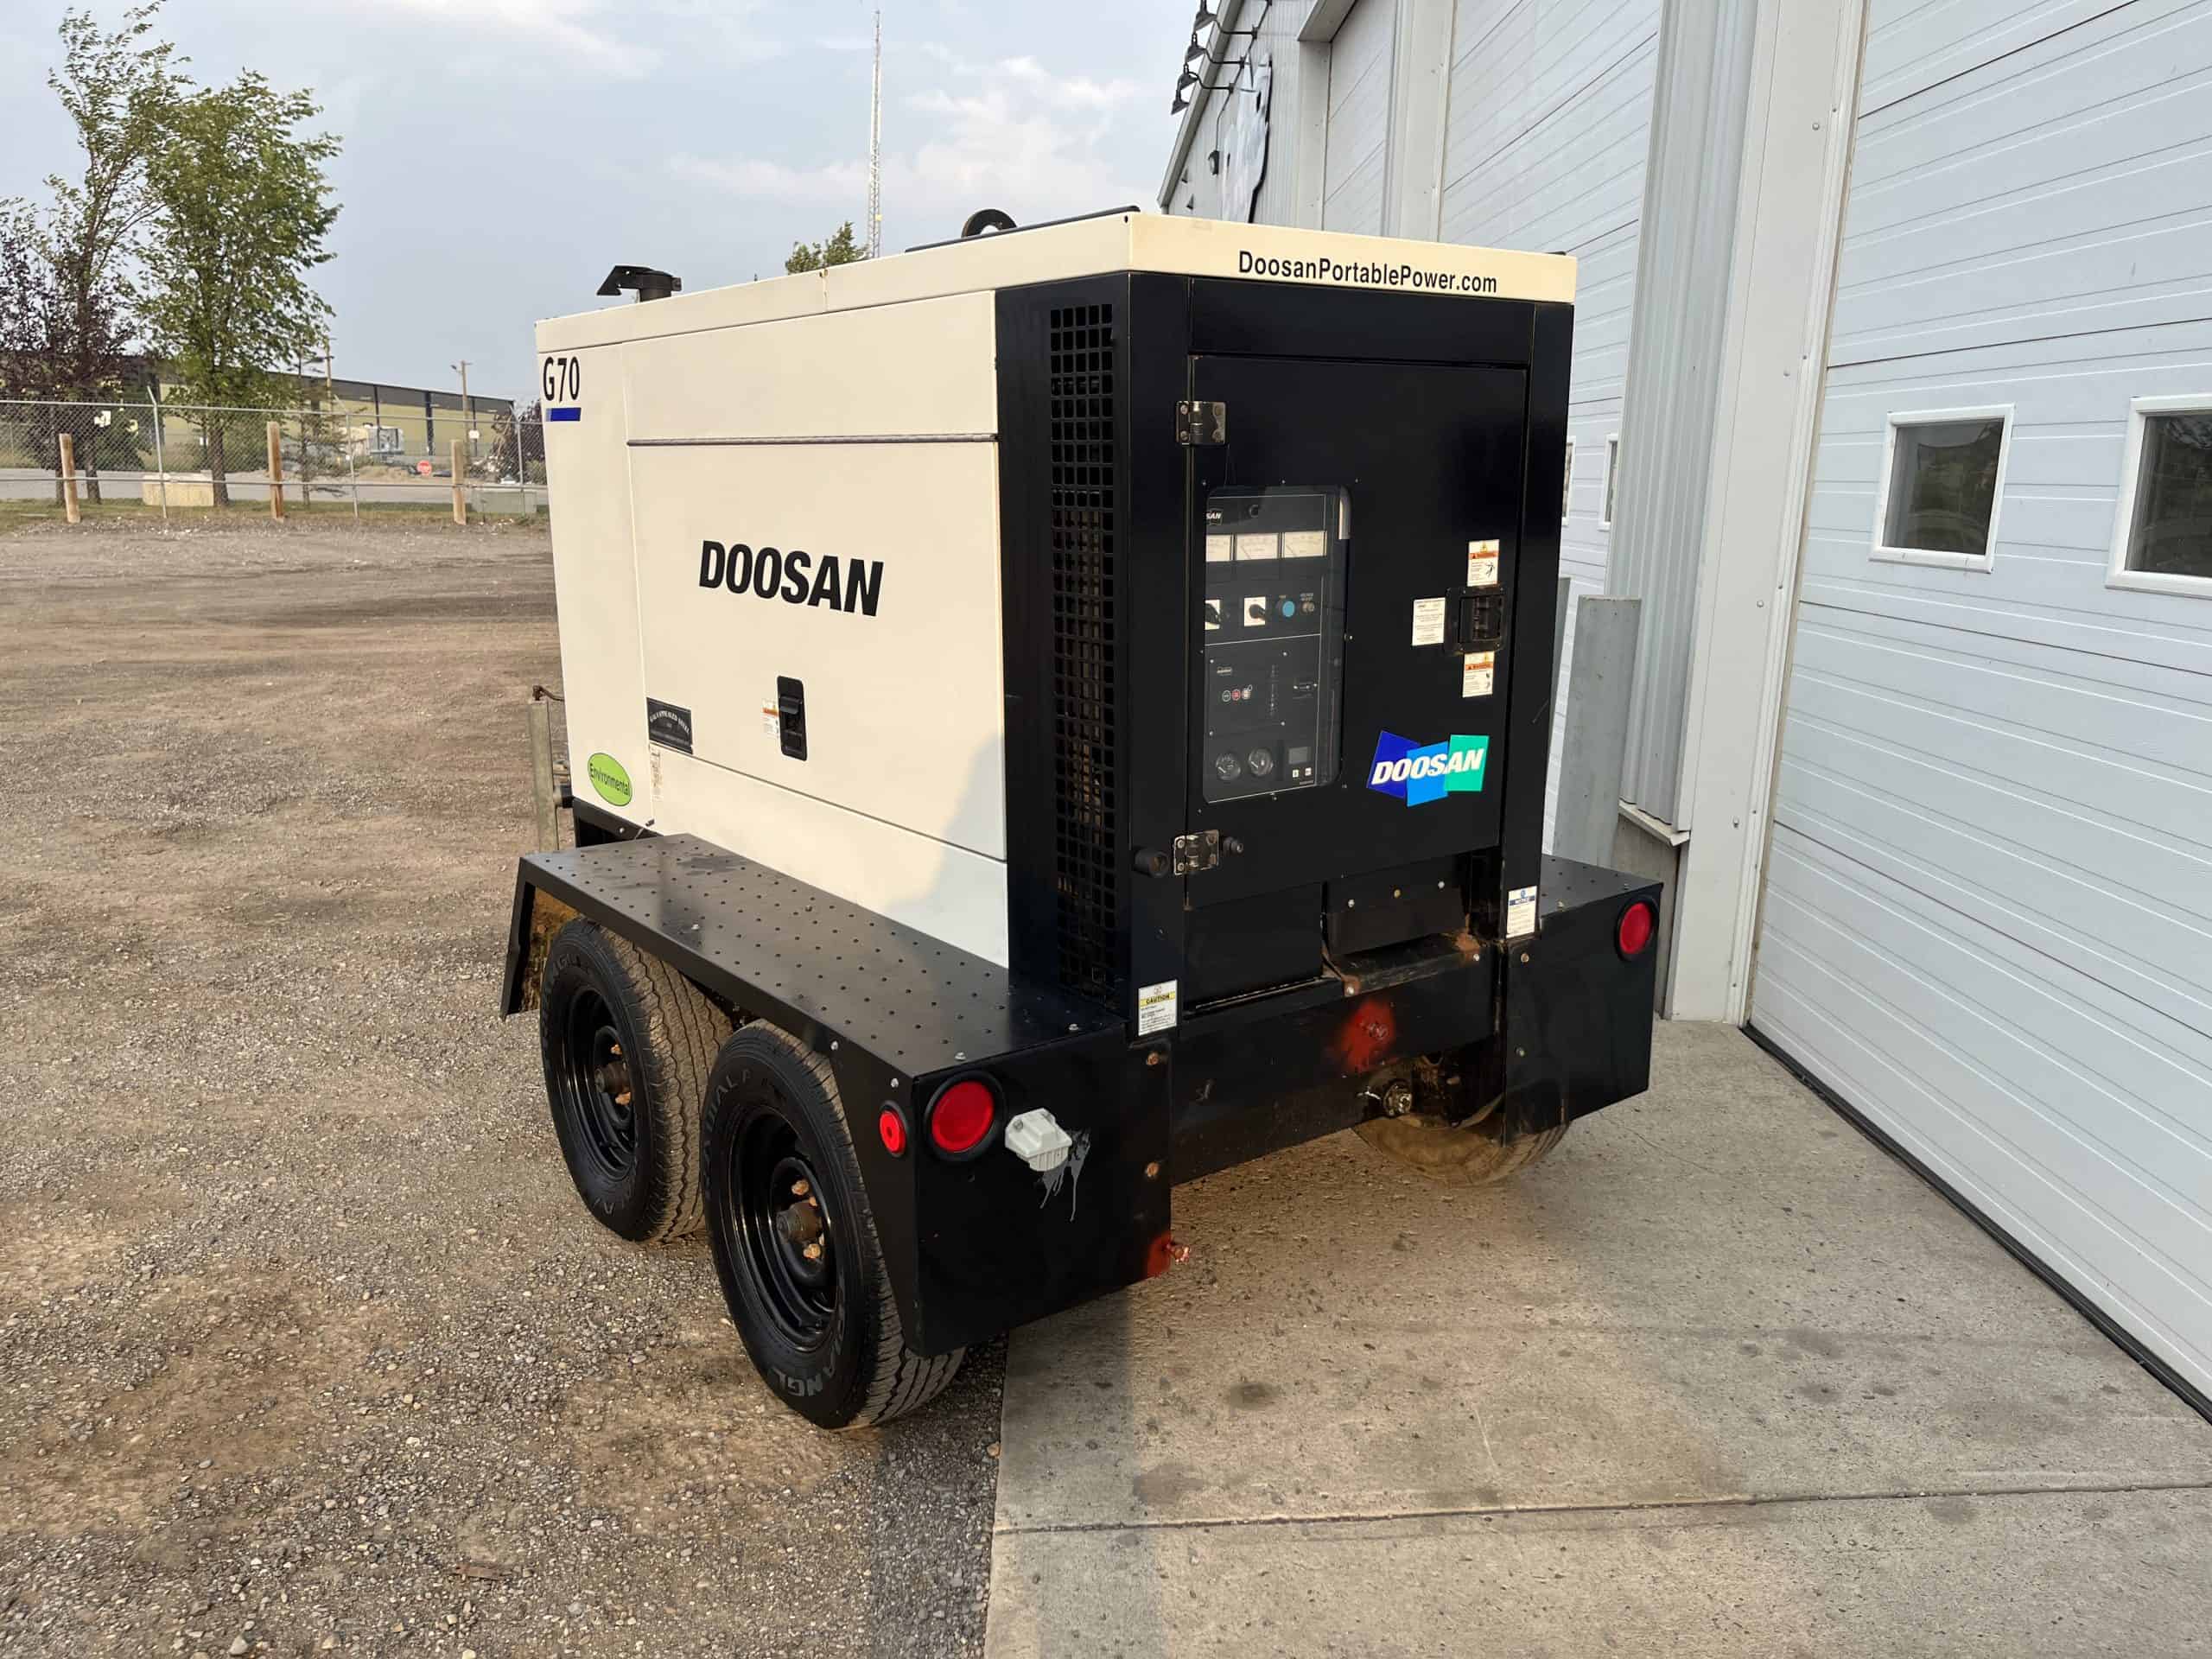 Doosan G70WJD-2A-T3 tow behind diesel generator for sale 70 kva 56 / 58 kw in Saskatchewan, Manitoba Canada